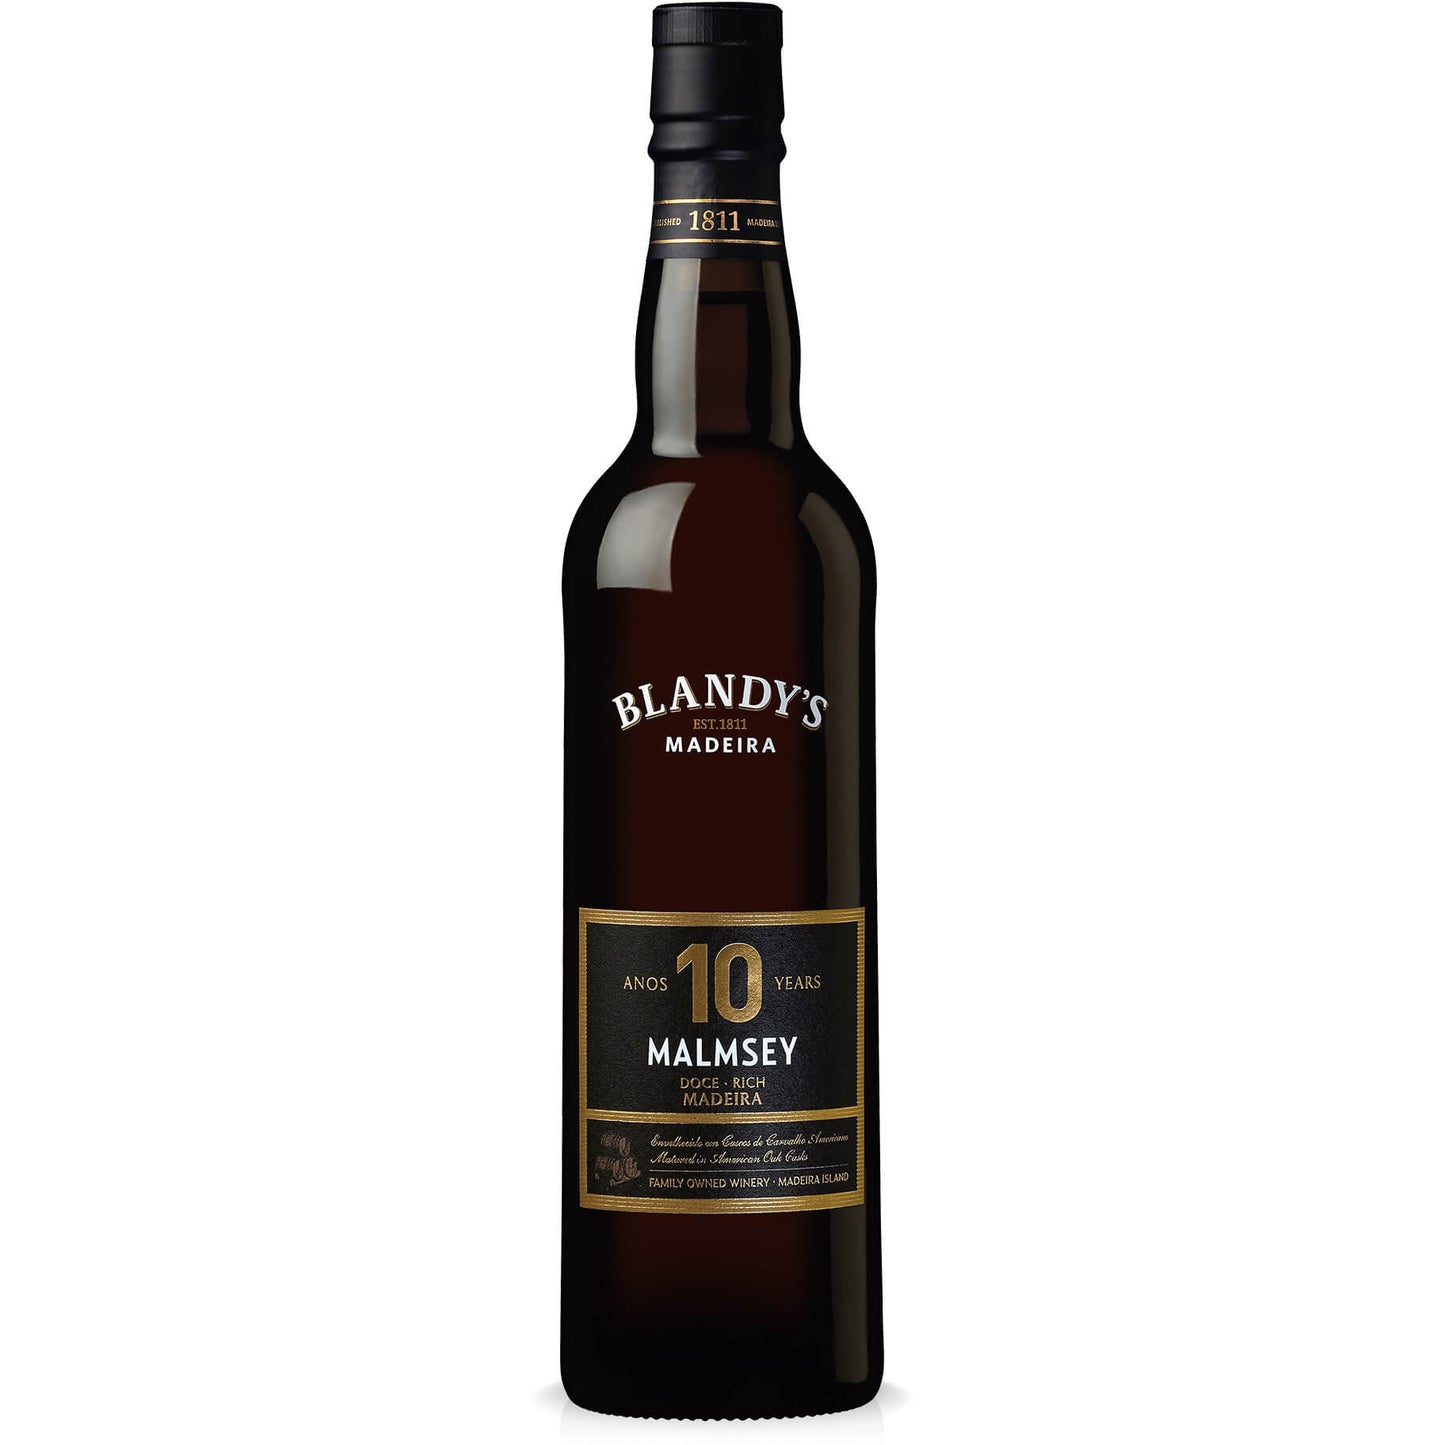 Blandy's, Madeira, 10 Years Malmsey Rich